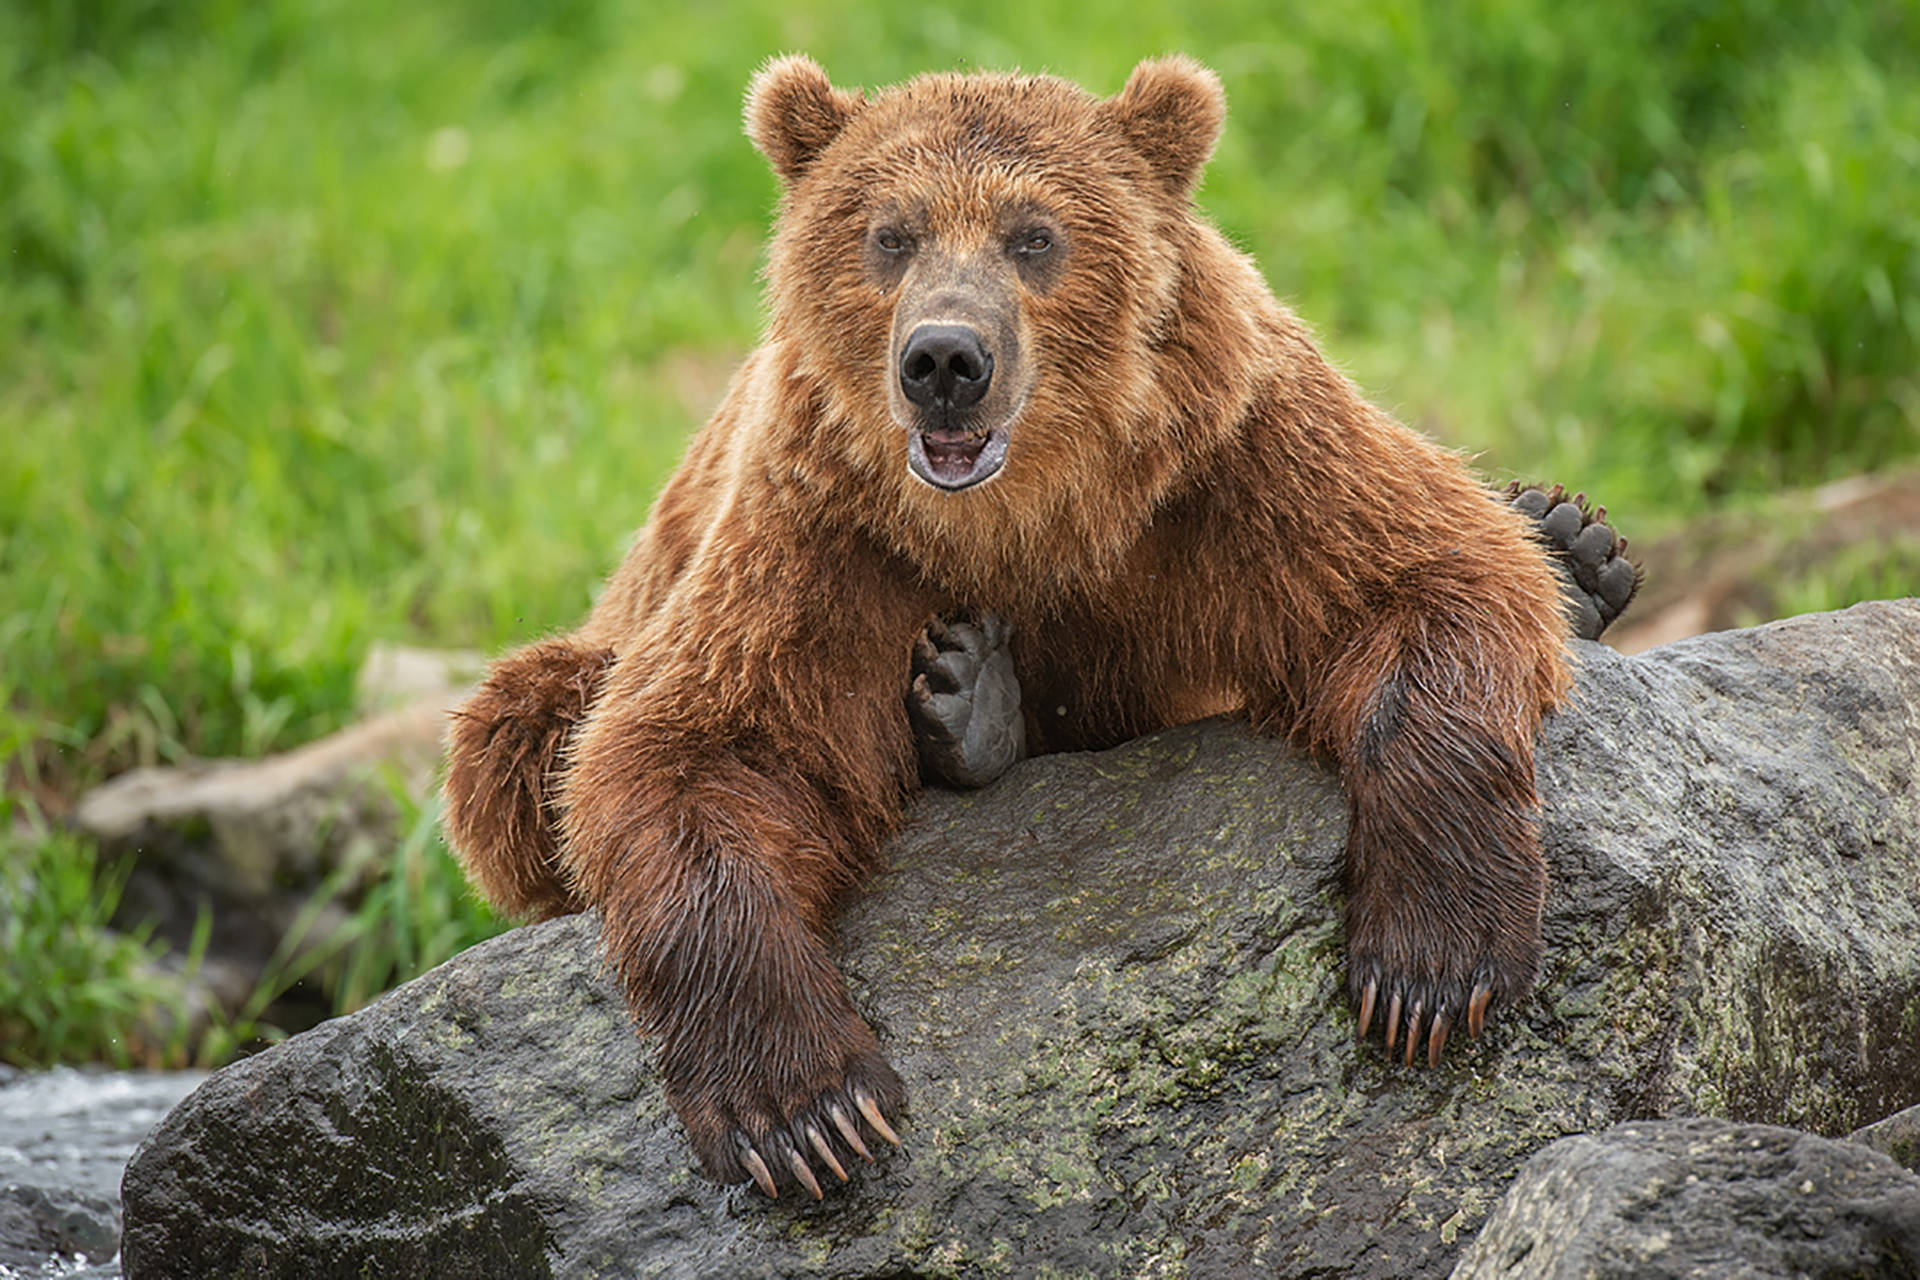 “A Cute Brown Bear Cuddling a Teddy Bear” Wallpaper